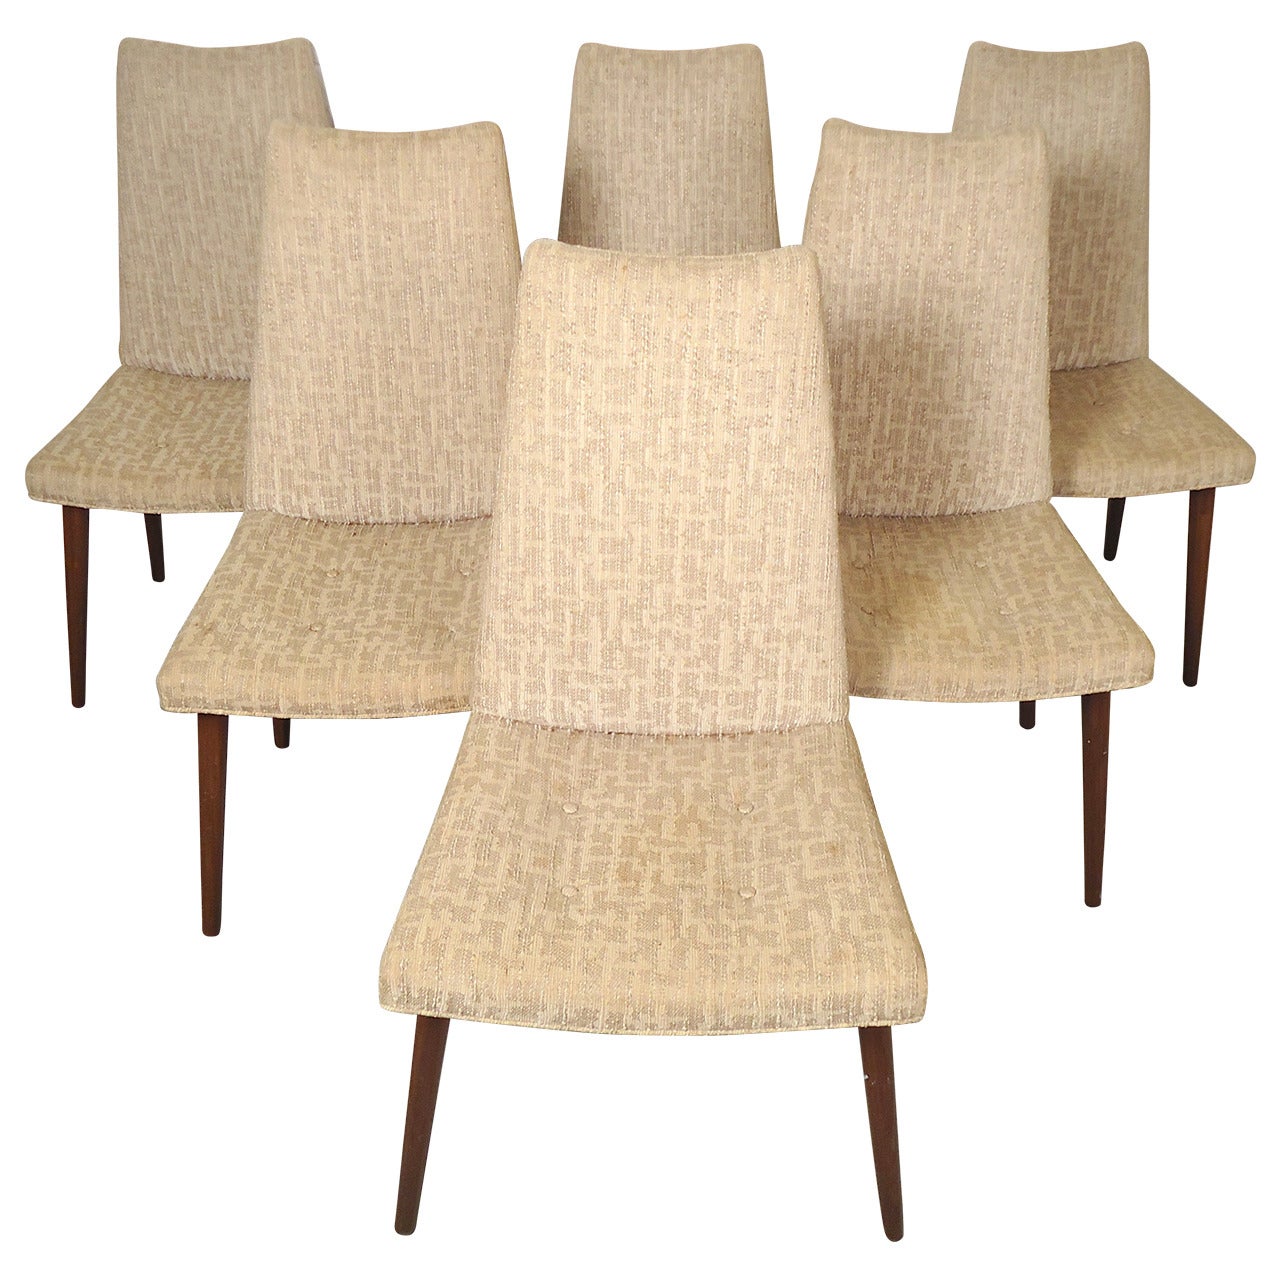 Six Mid-Century Modern Chairs